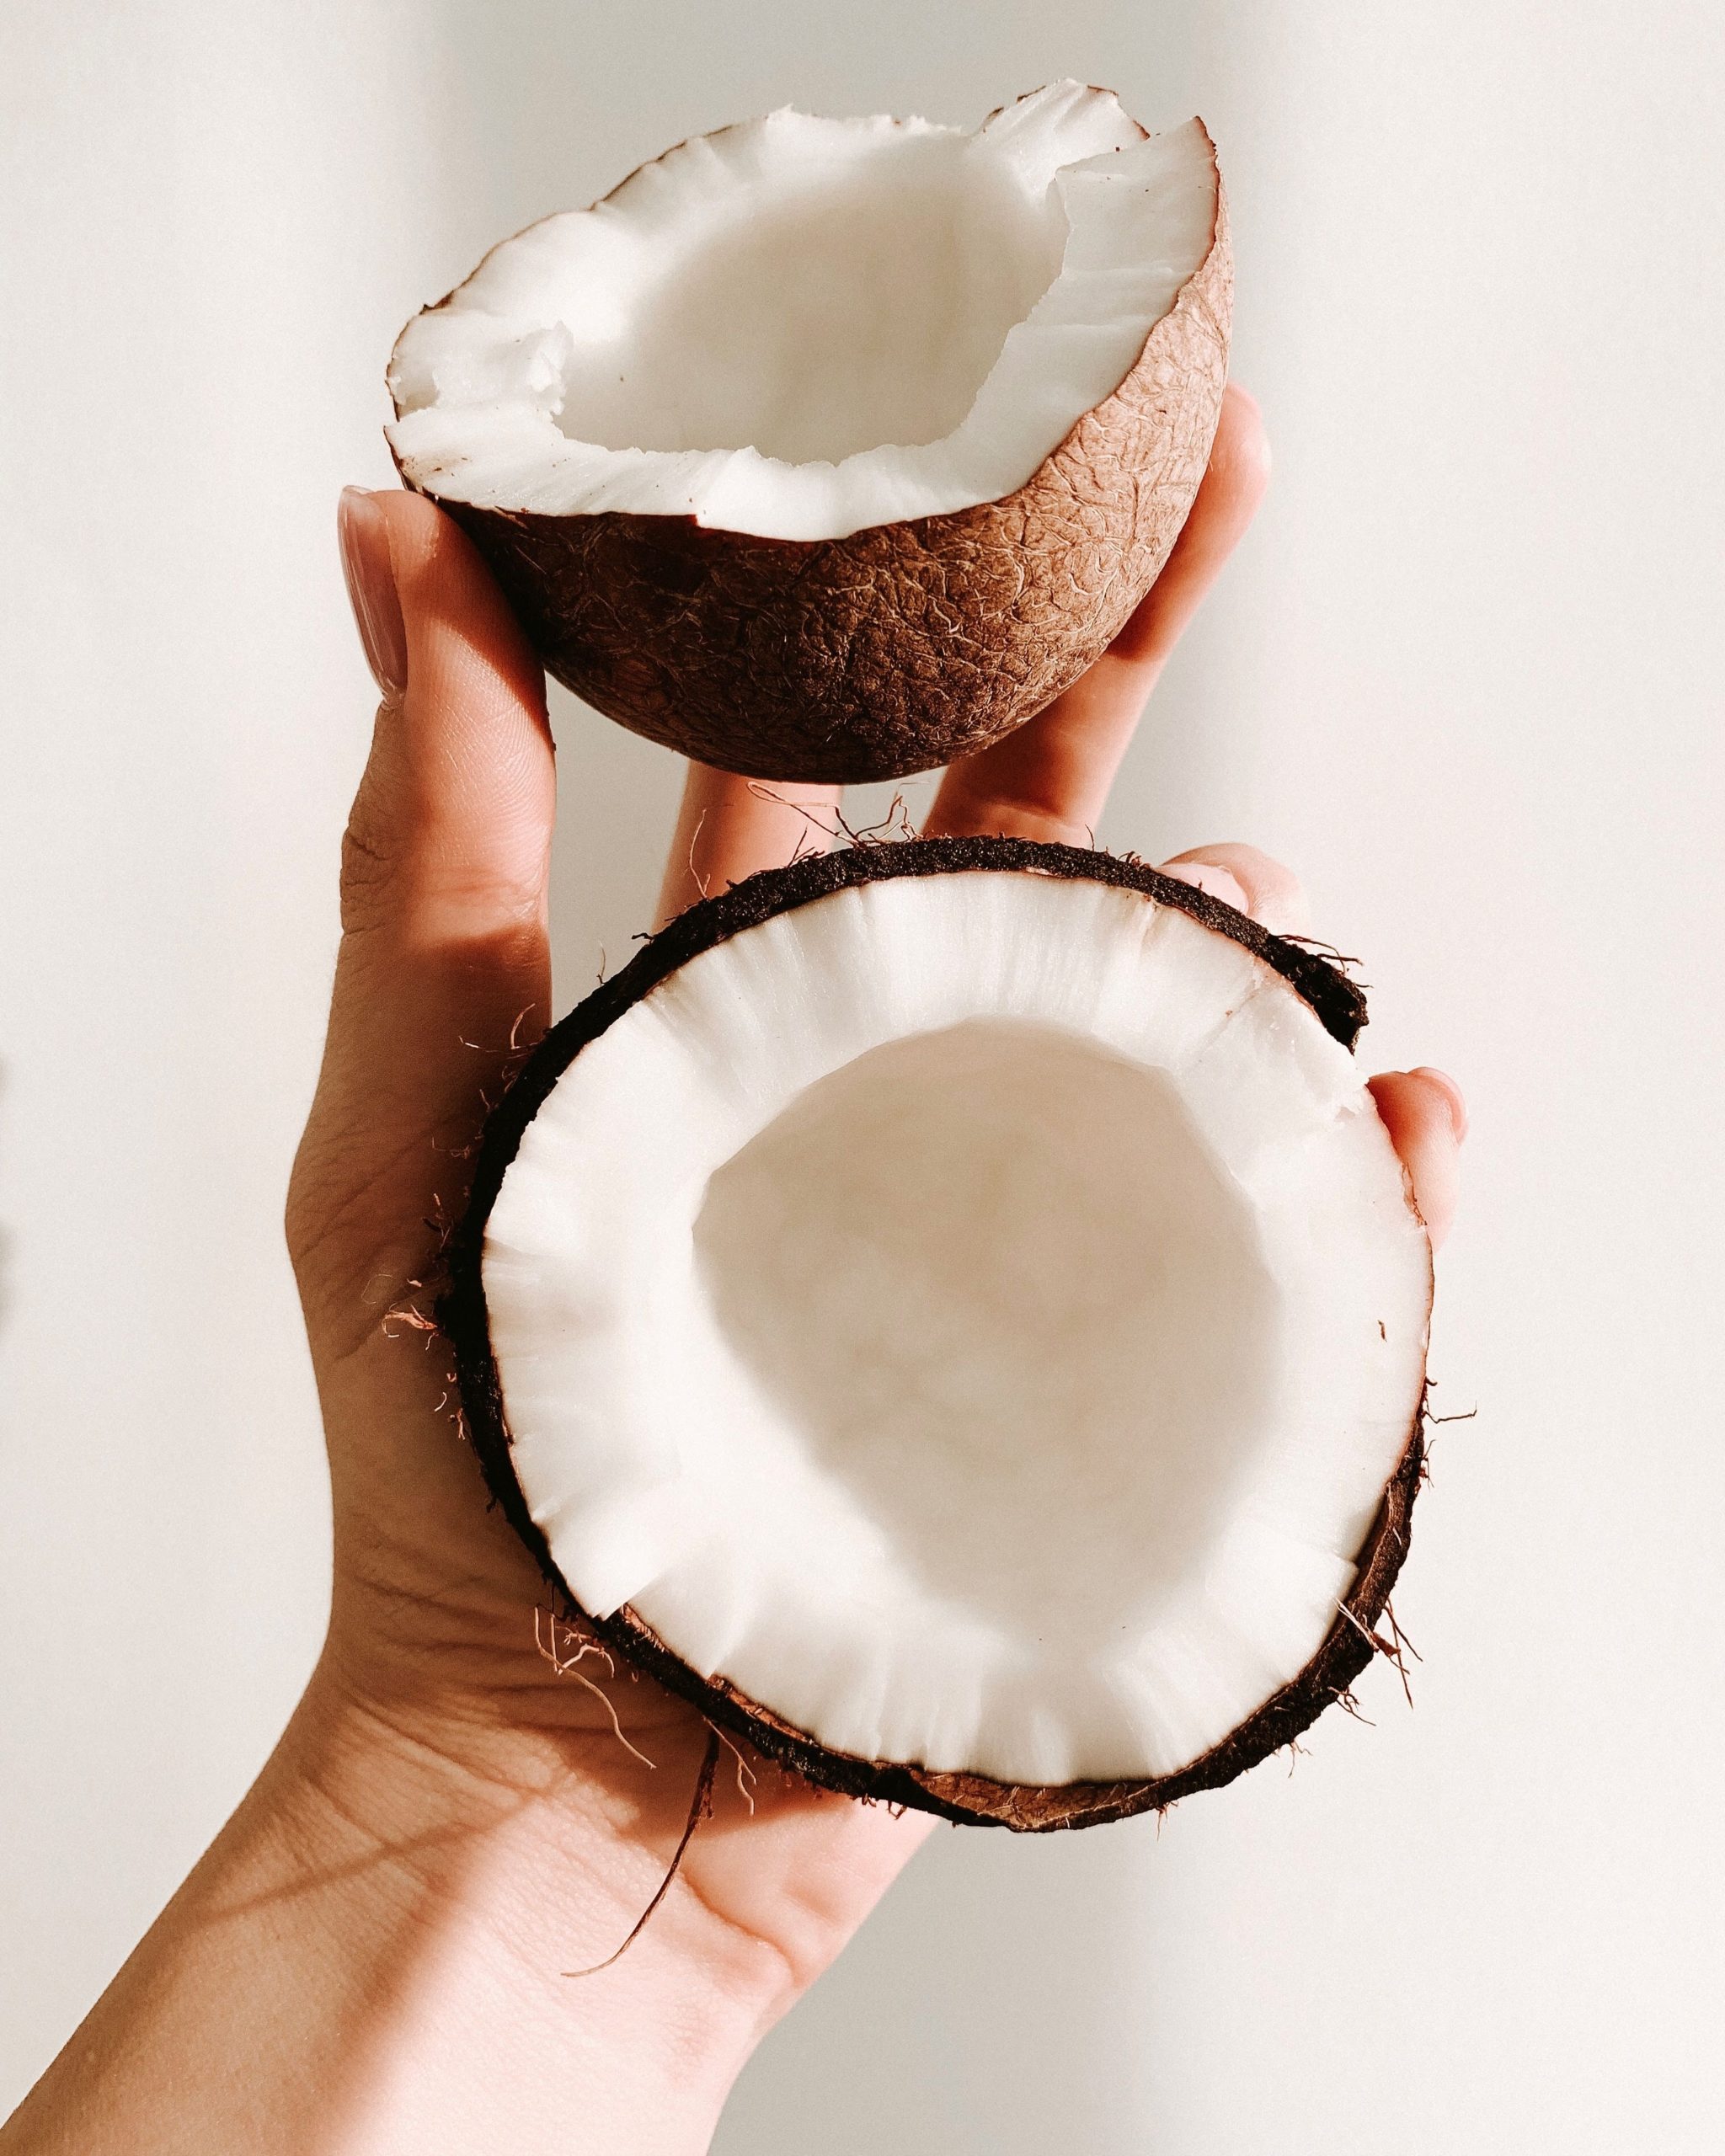 coconuts in hands